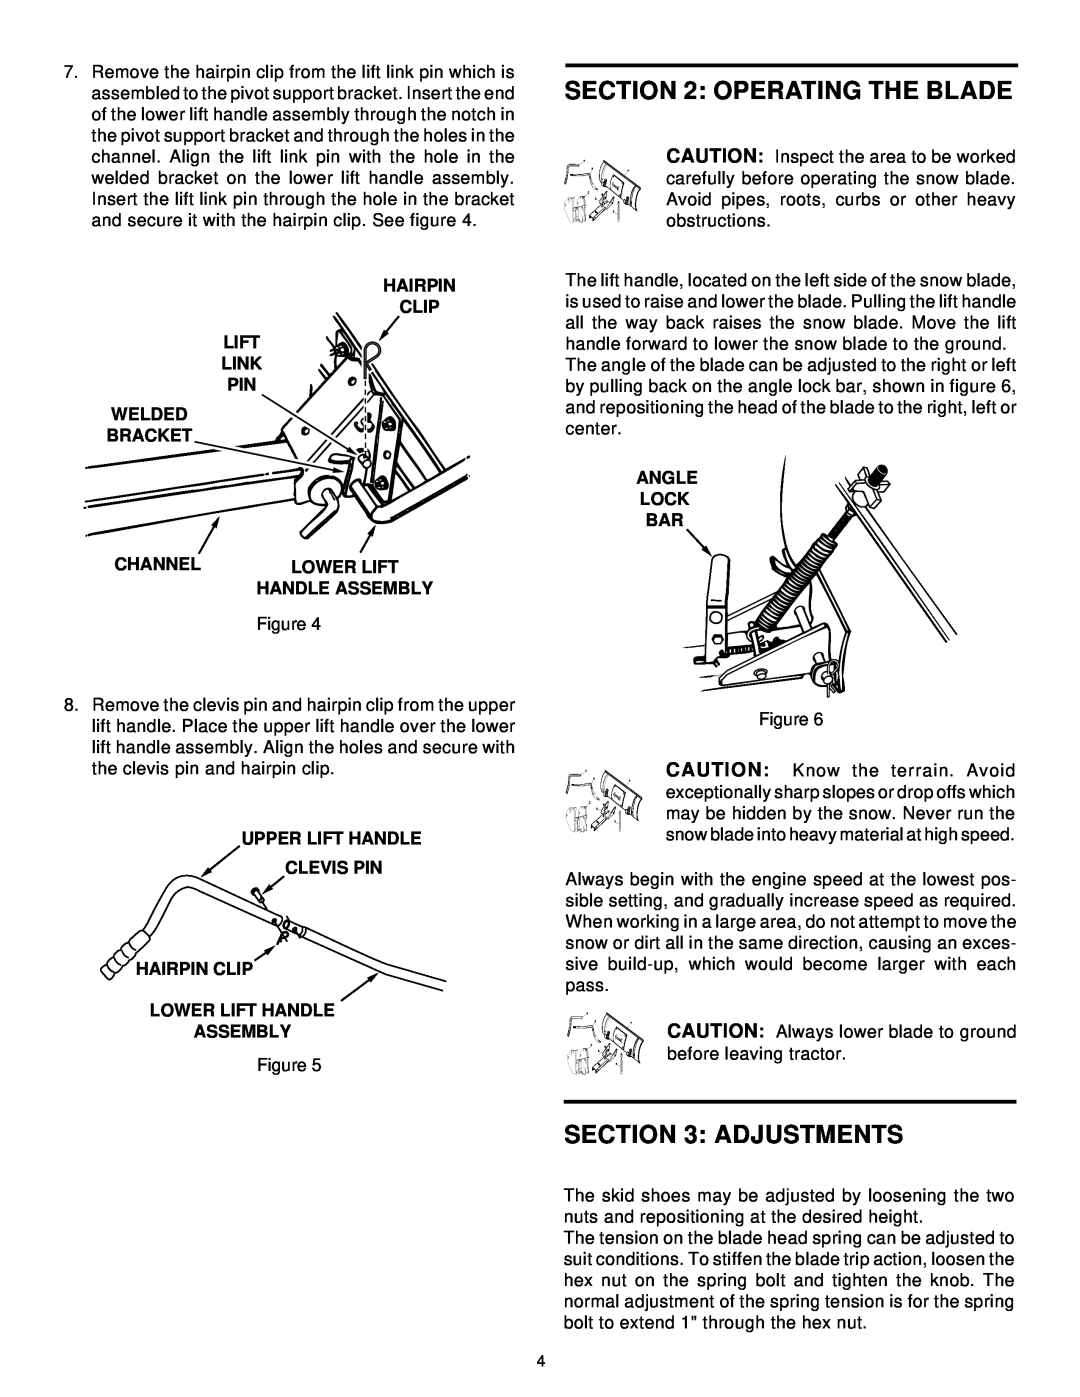 MTD 190-822, 46" SNOW BLADE manual Operating The Blade, Adjustments 